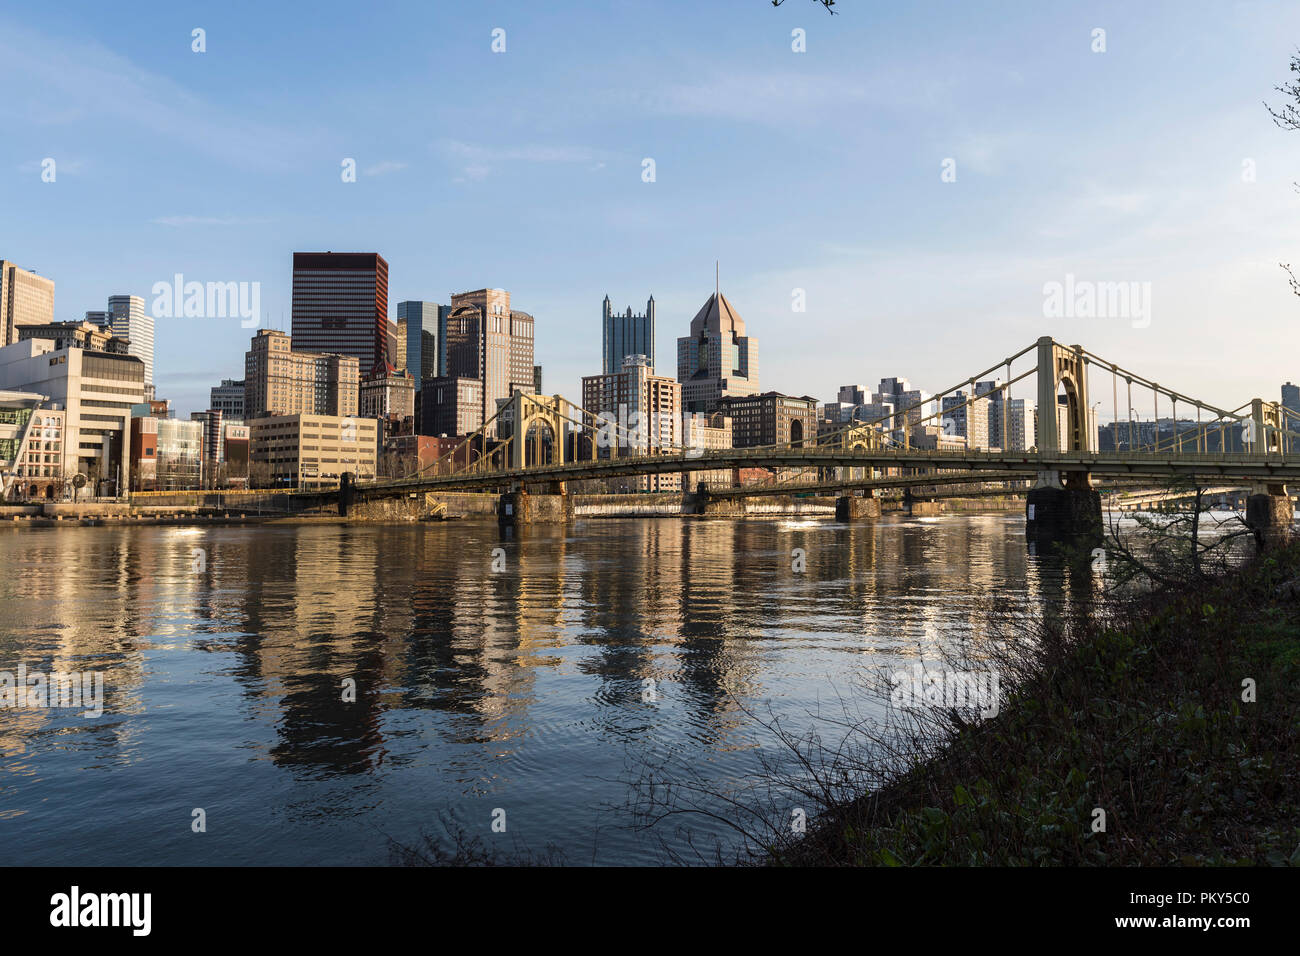 Downtown River Waterfront und Brücken der Allegheny River Crossing in Pittsburgh, Pennsylvania. Stockfoto